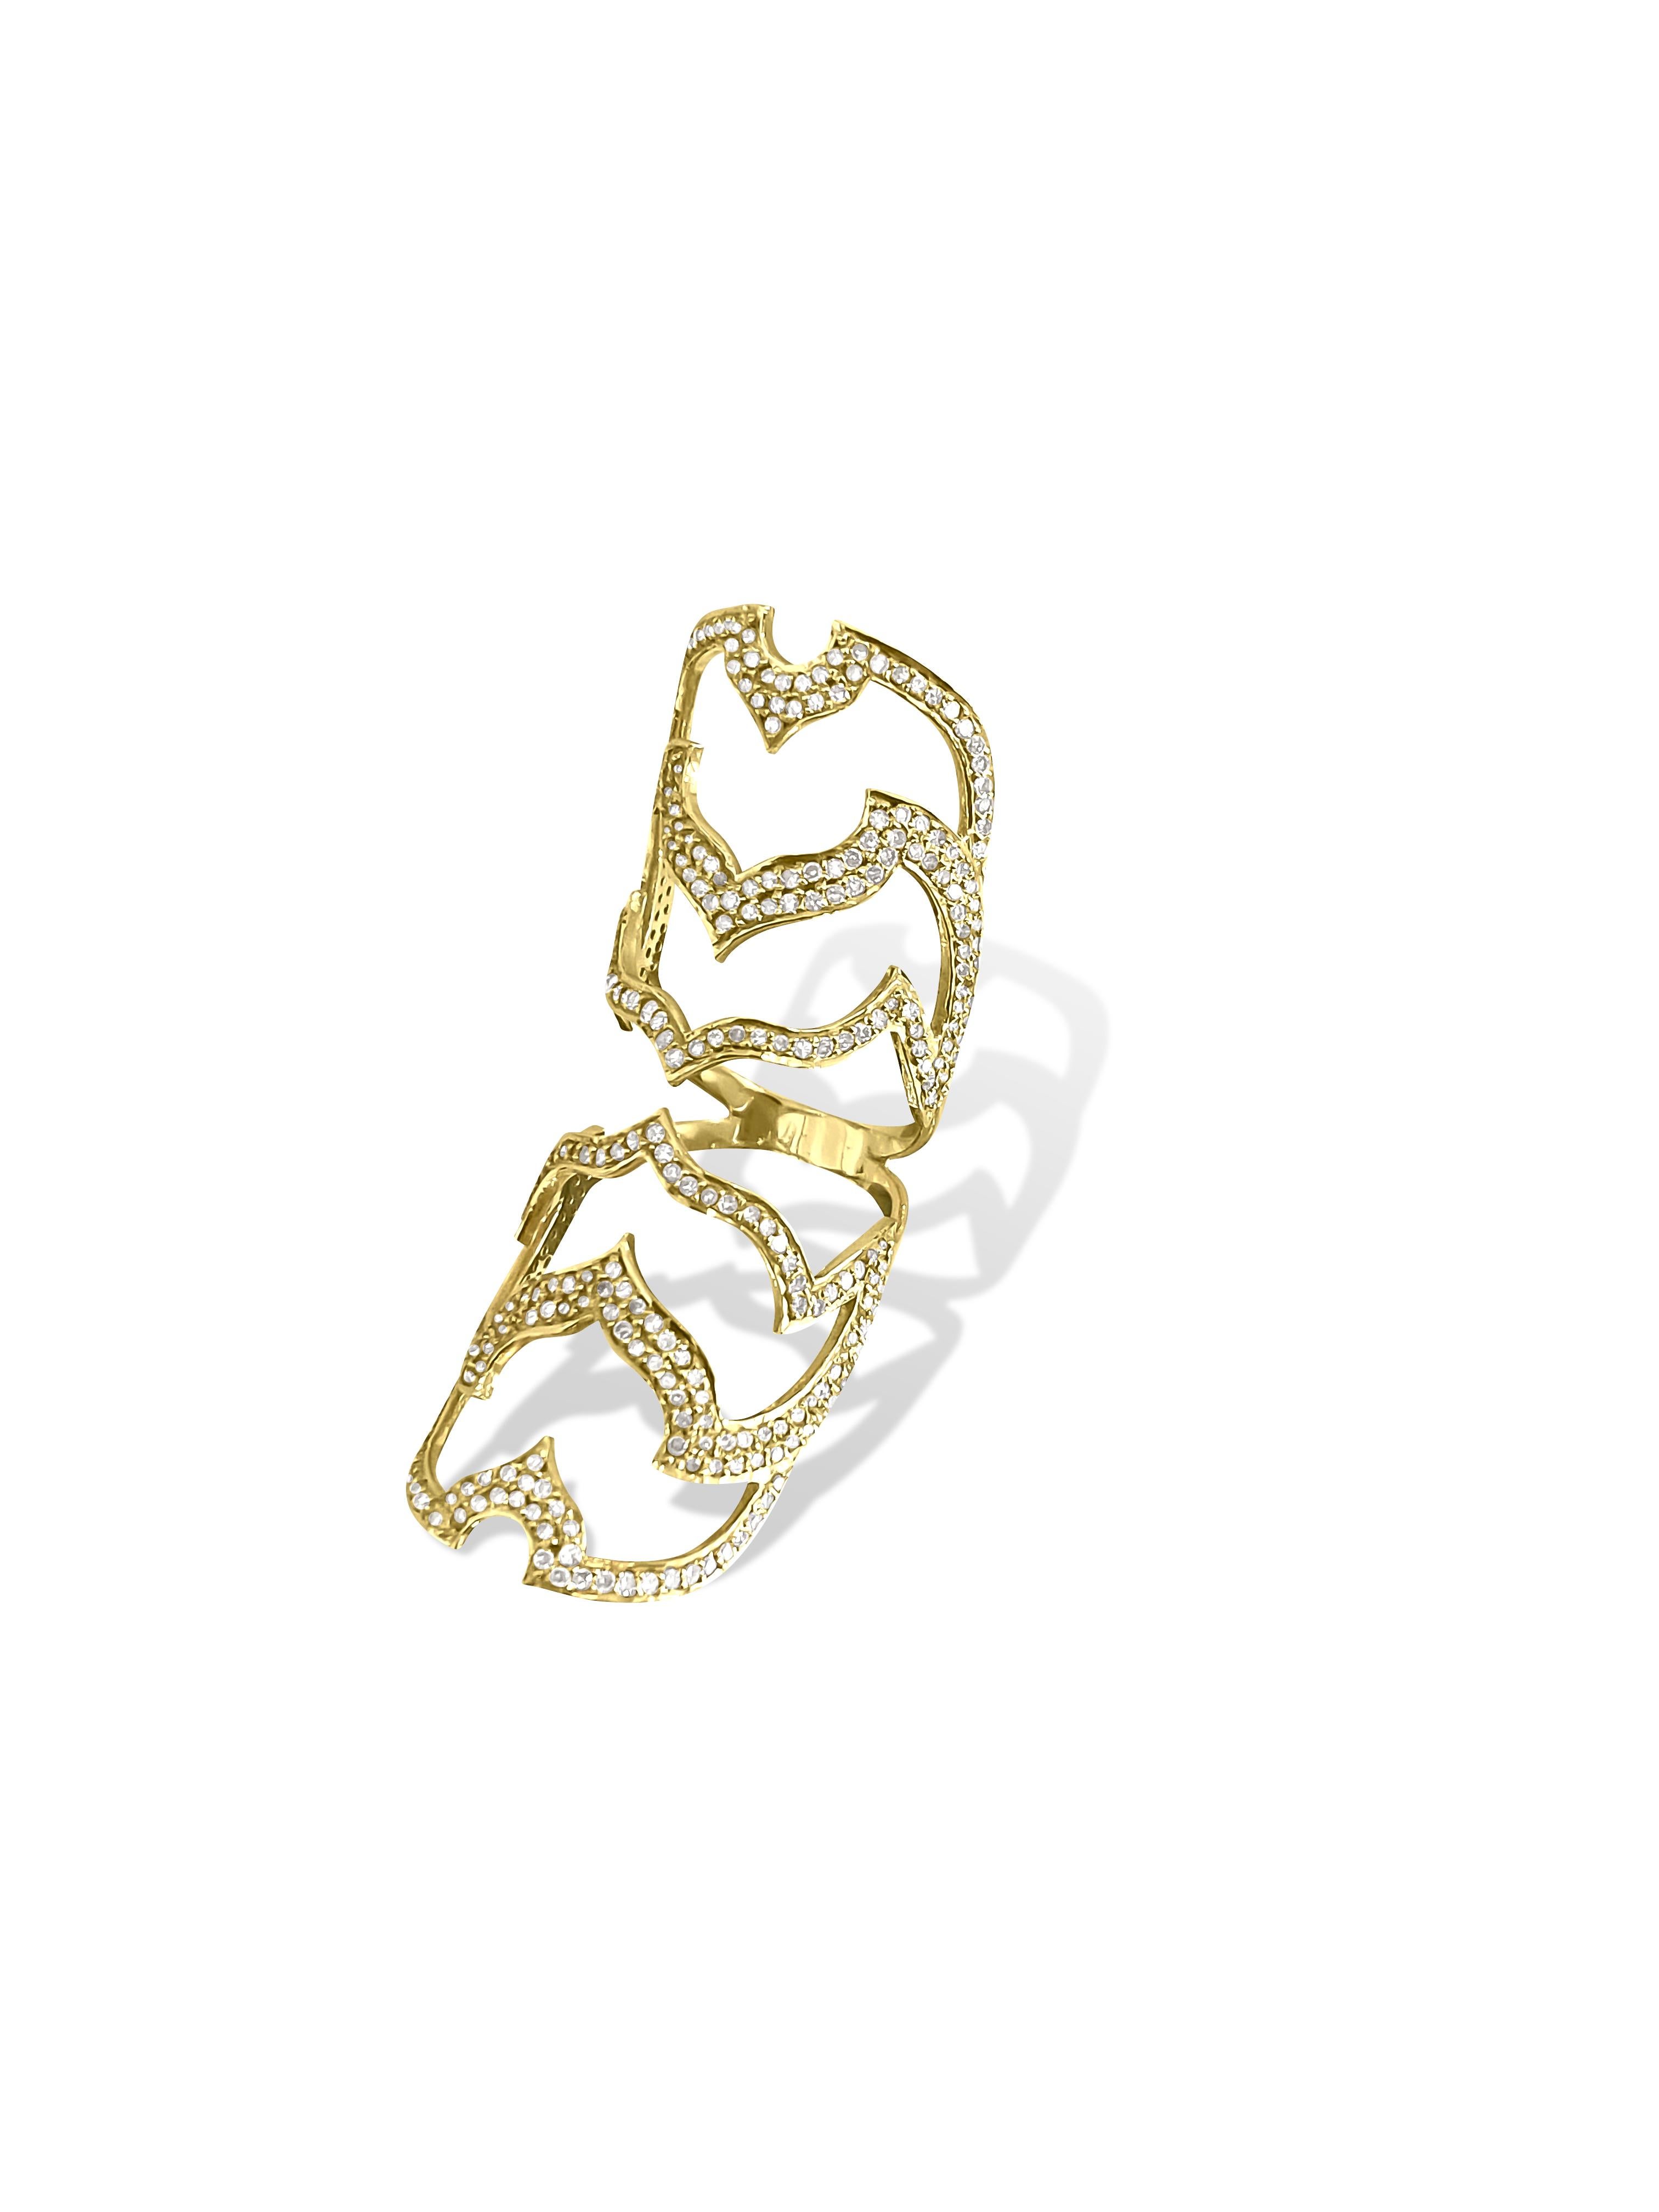 Edwardian 1.97 Carat Diamond Gold Fancy Long Finger Ring For Sale